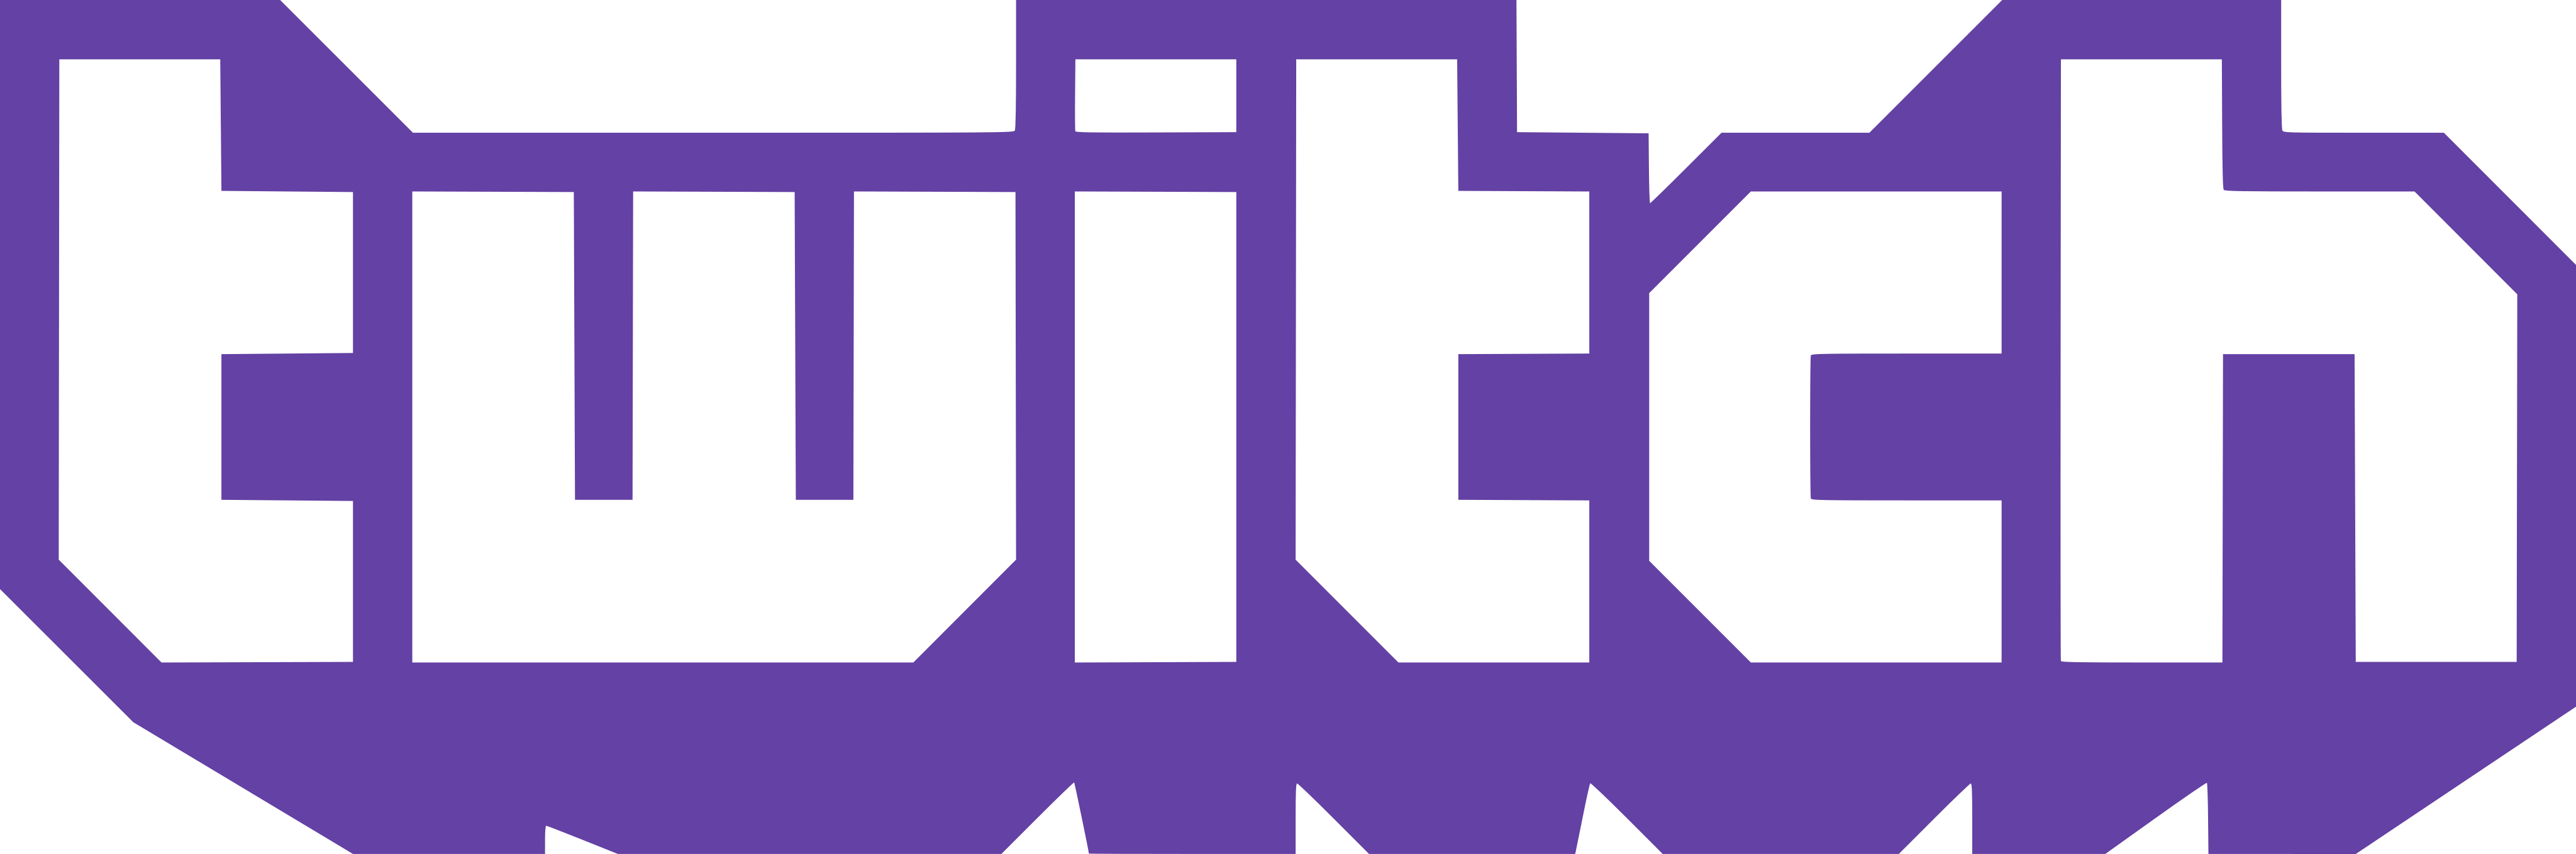 Twitch Logo PNG - 179566